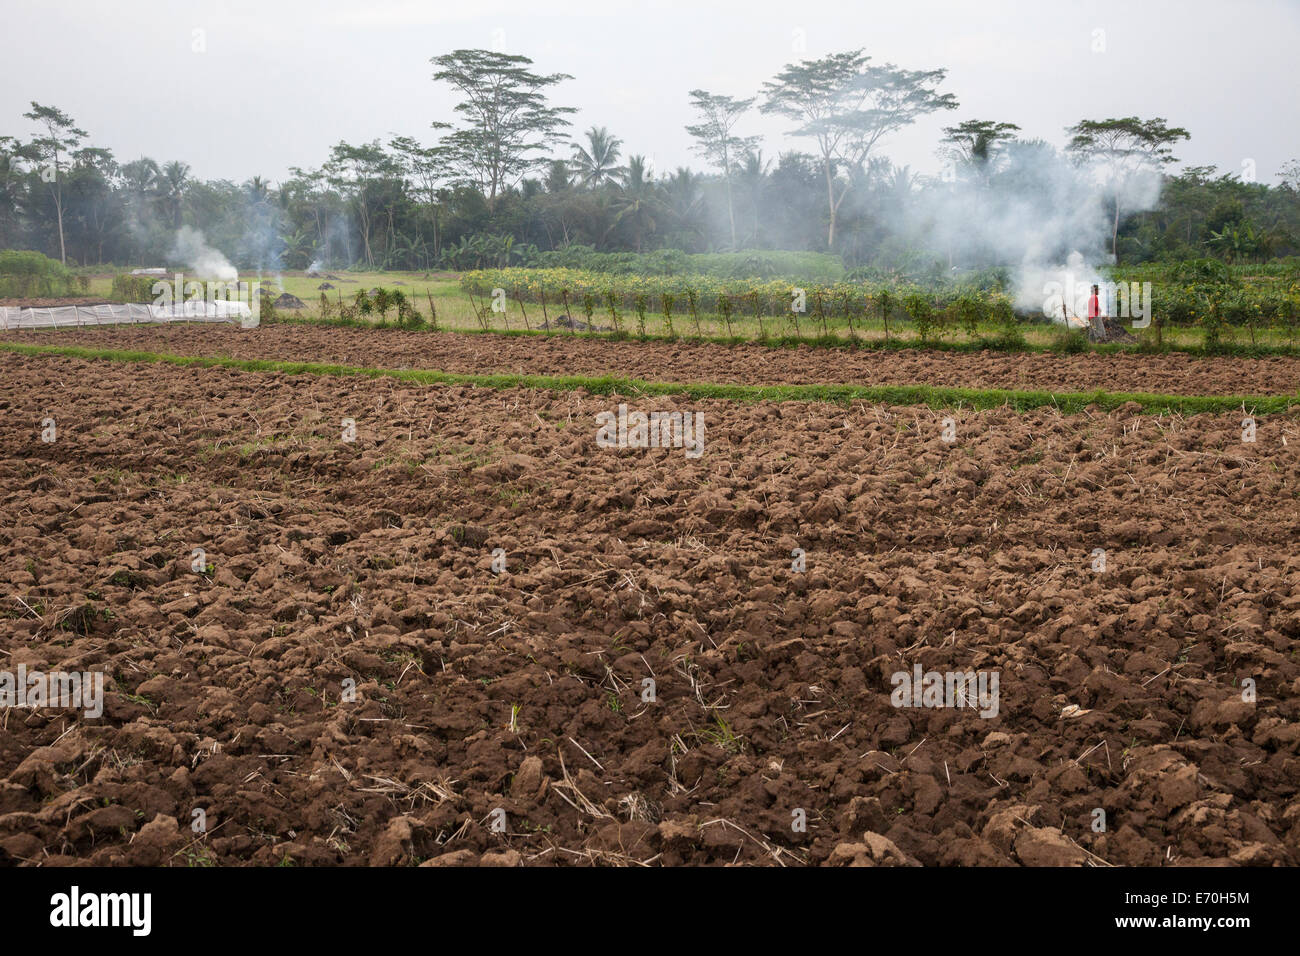 Borobudur, Java, Indonesia.  Preparing Fields to Plant Tobacco.  Burning Trash Contributes to Air Pollution. Stock Photo